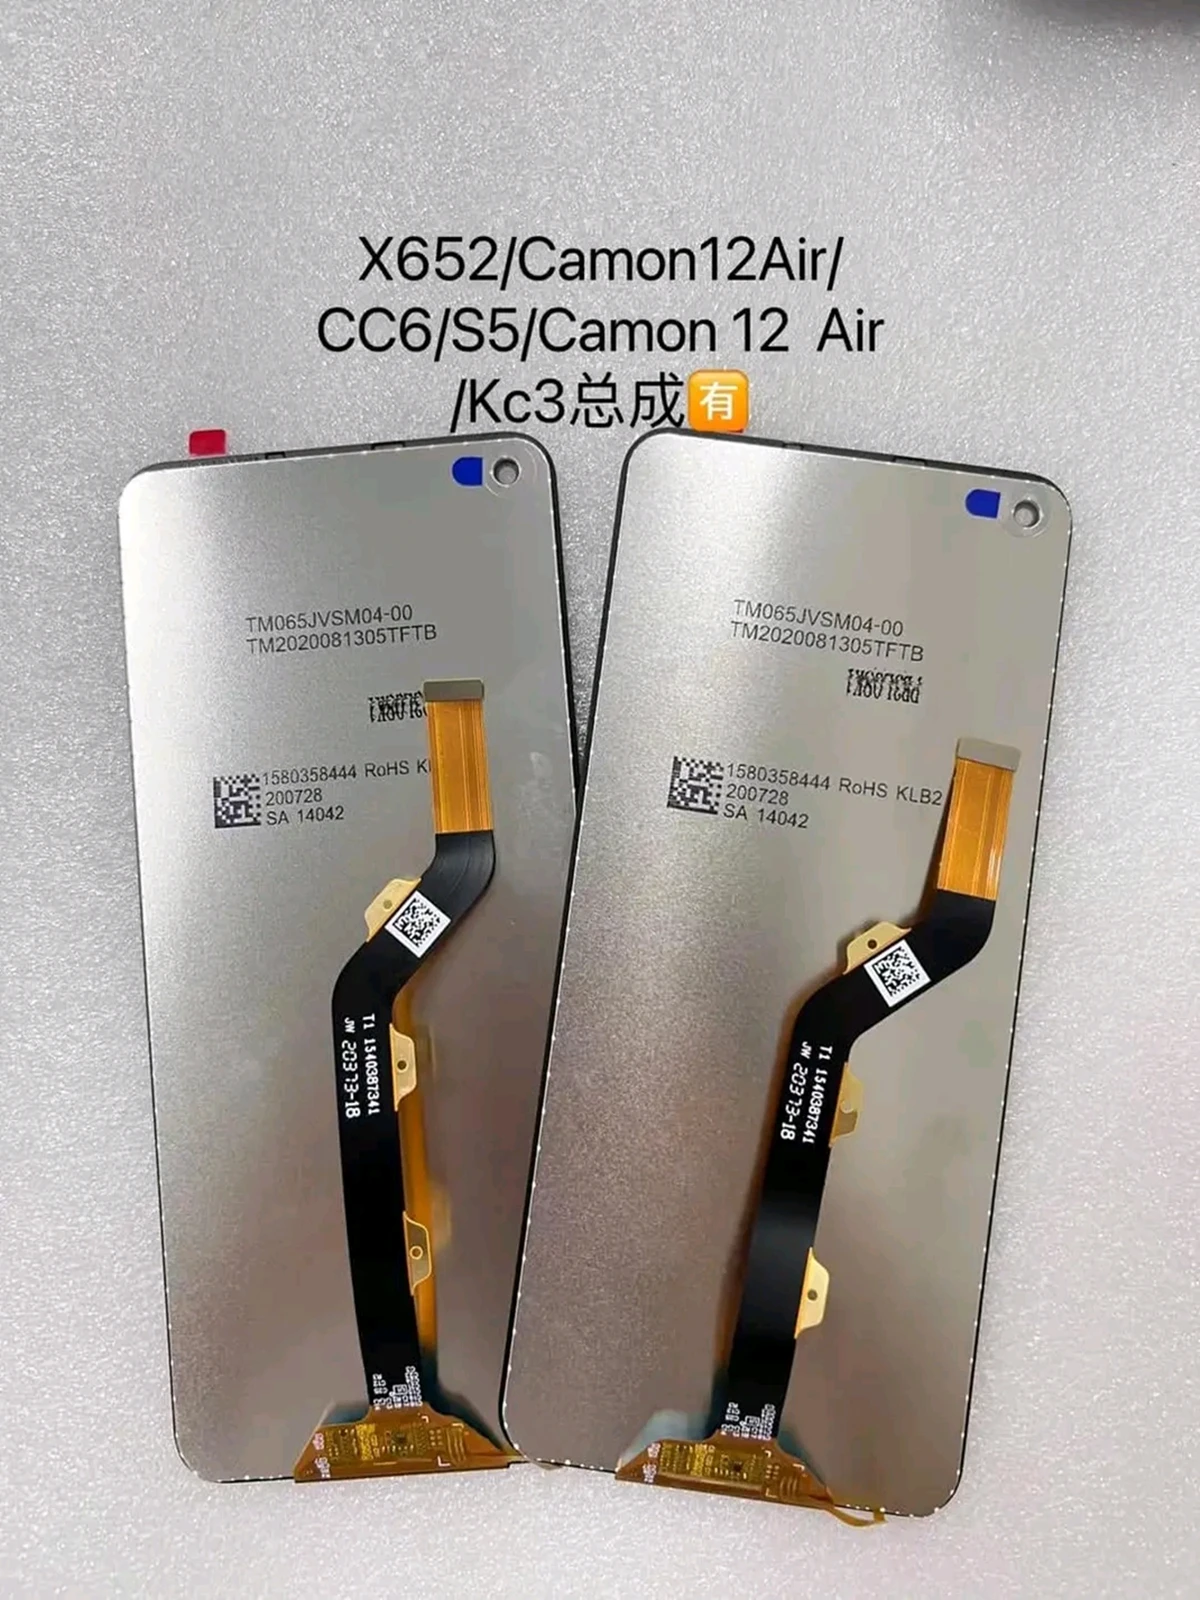 

New Original For Tecno Infinix Camon 12Air X652 Camon 12 Air CC6 S5 Camon12 Air Kc3 Camon12Air LCD Display Touch Screen Assembly